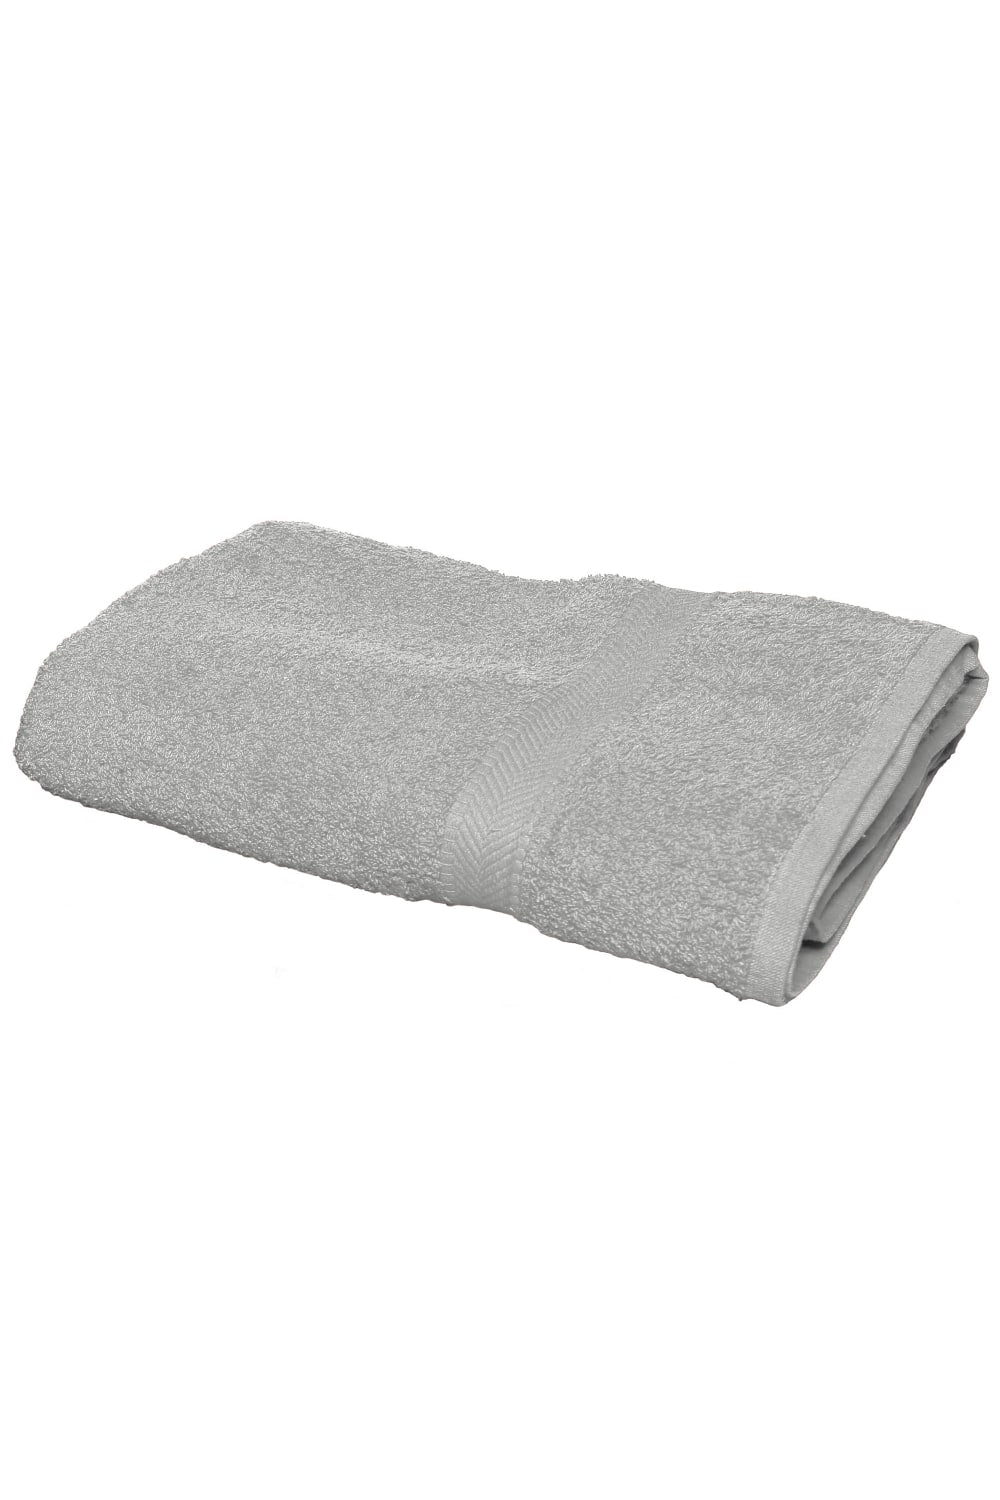 Towel City Luxury Range 550 GSM - Bath Sheet (100 X 150CM) (Grey) (One Size)